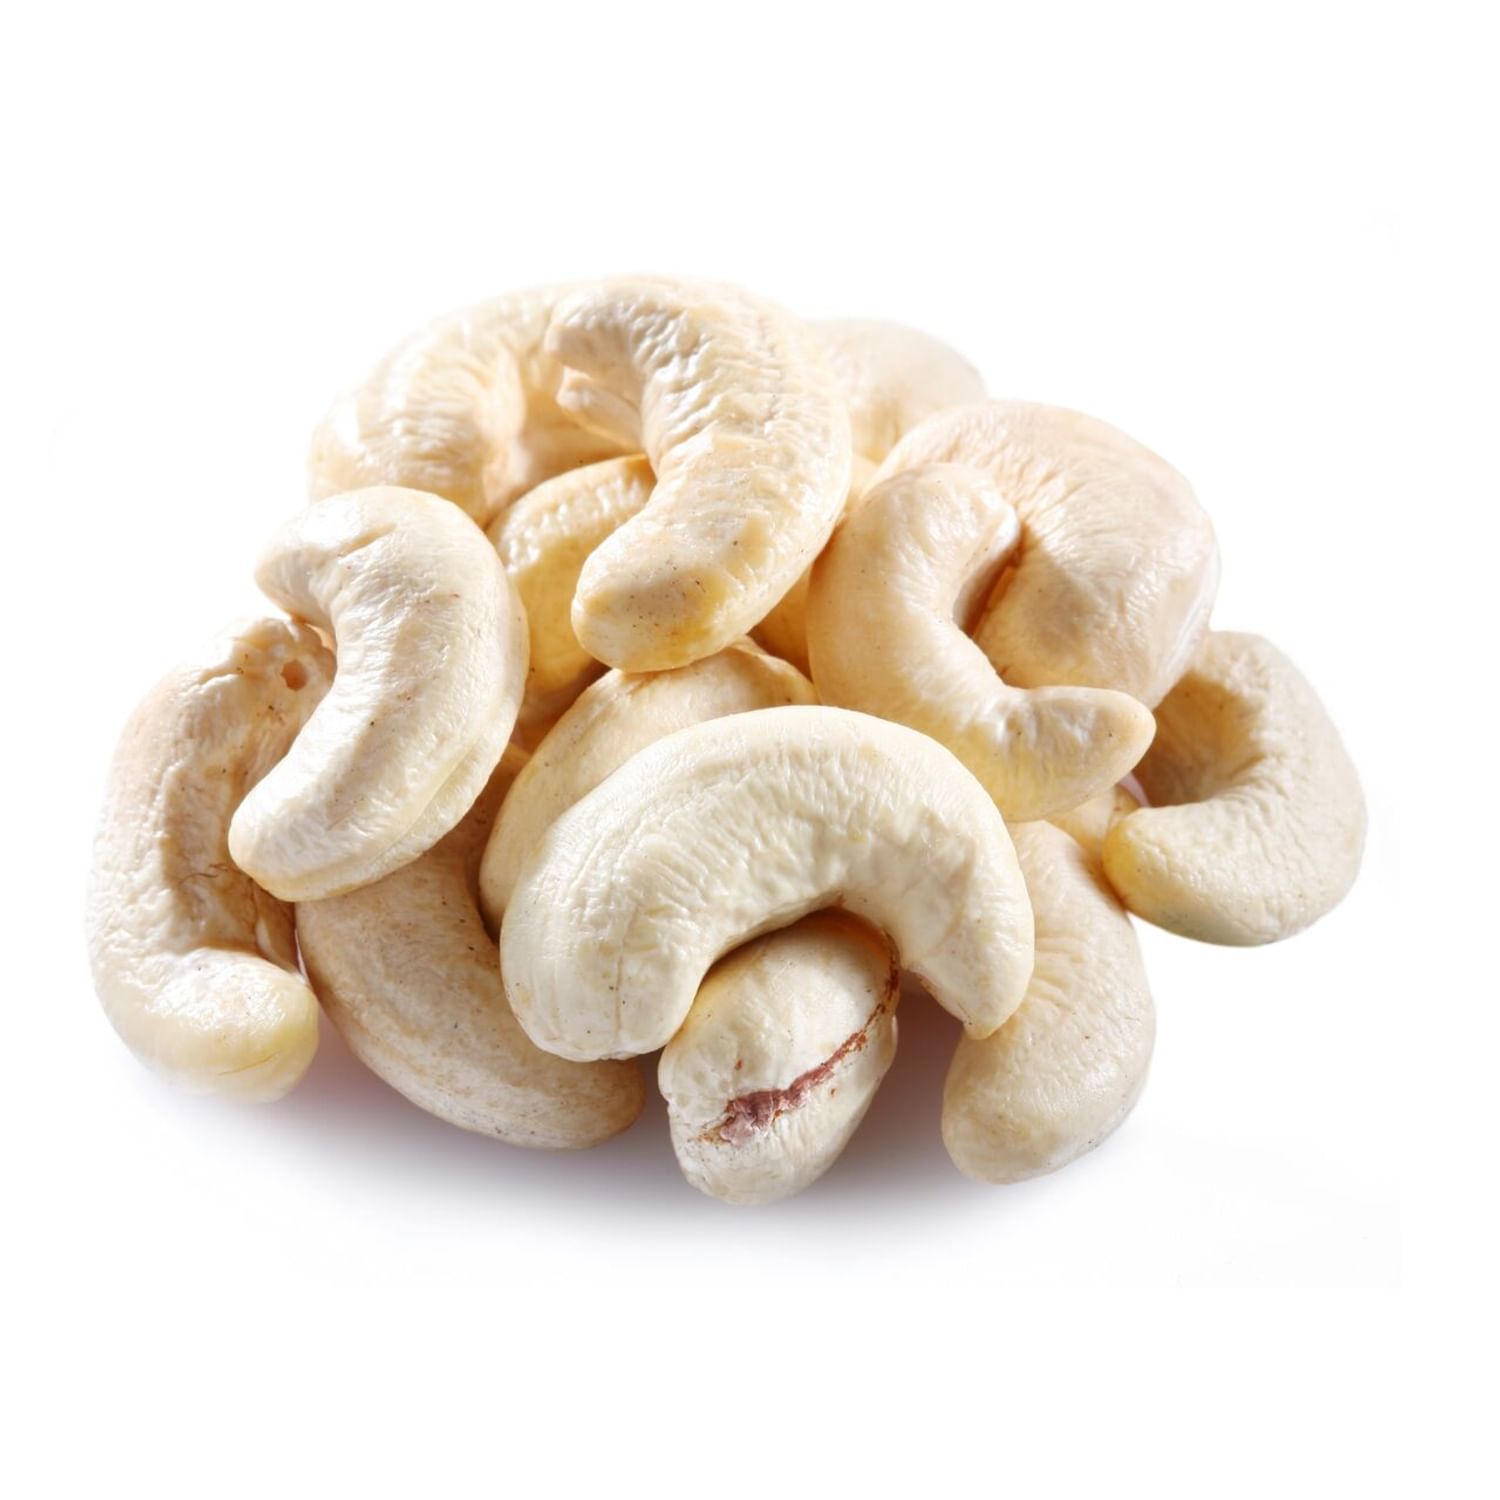 Nutraj Special Cashew Nuts 1000g (2 X 500g)